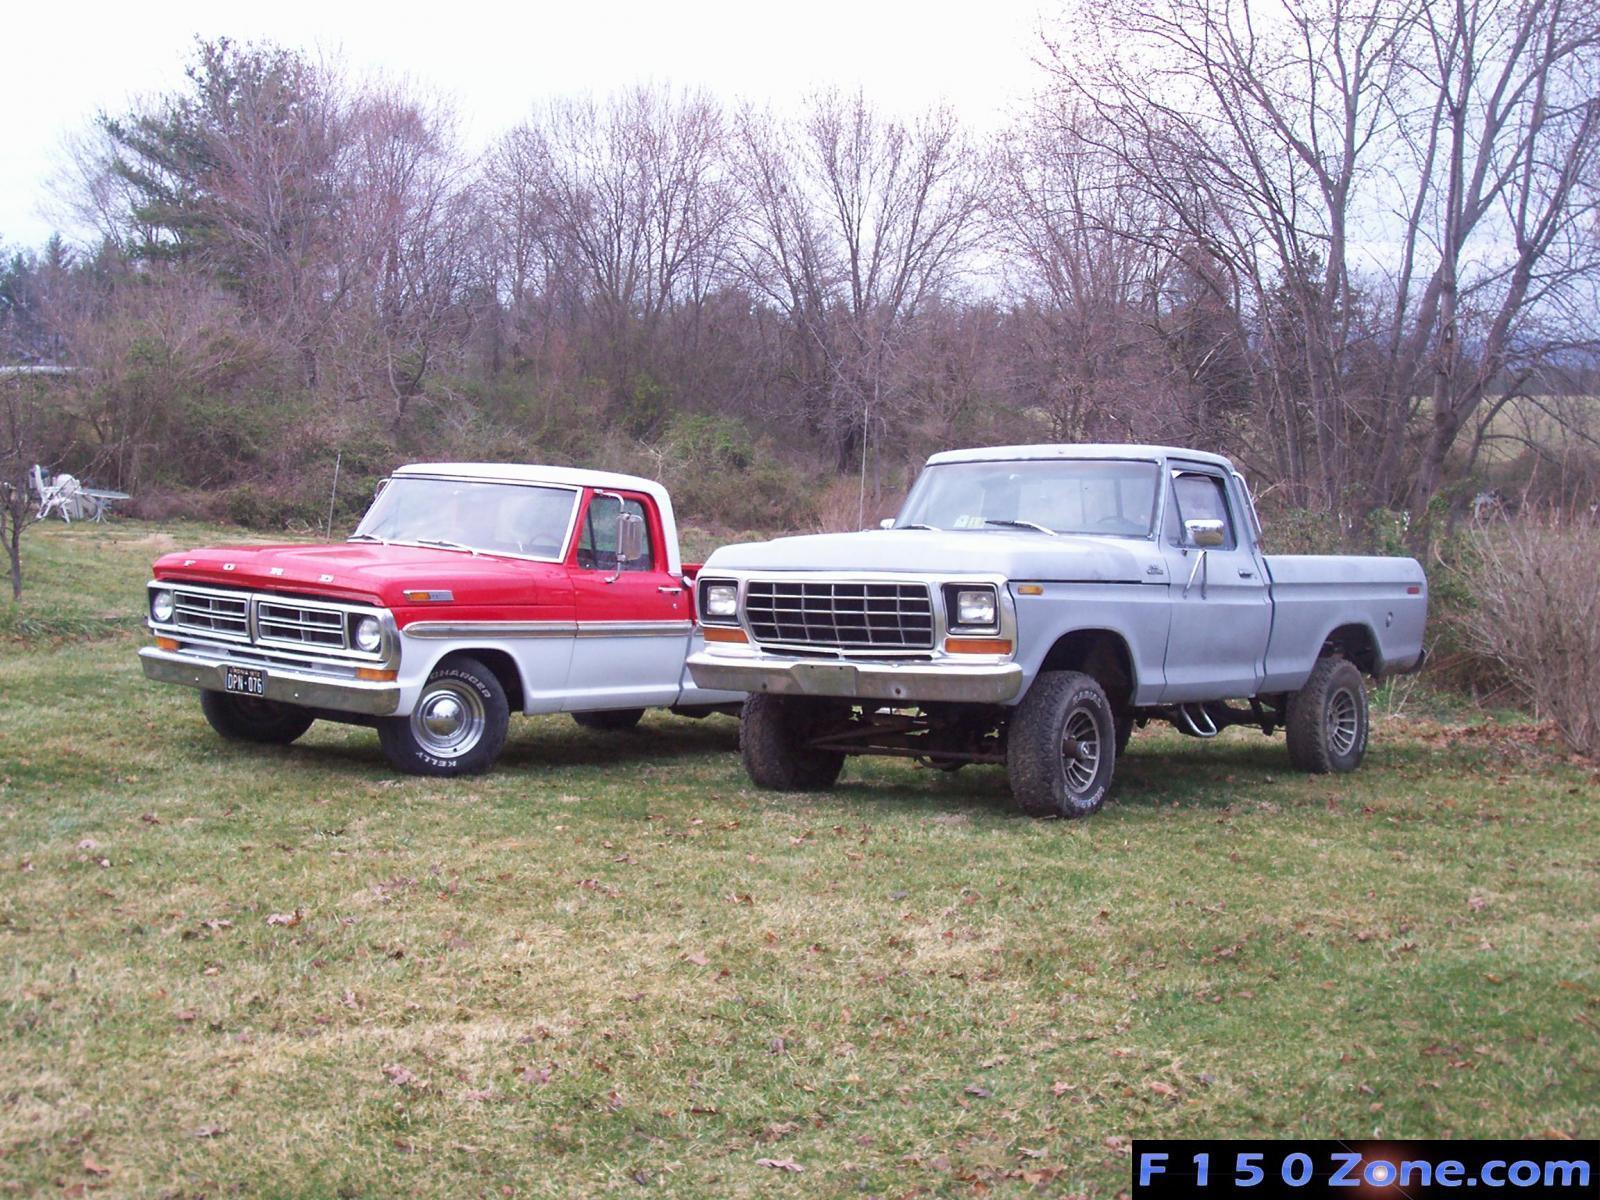 Both my Trucks 2